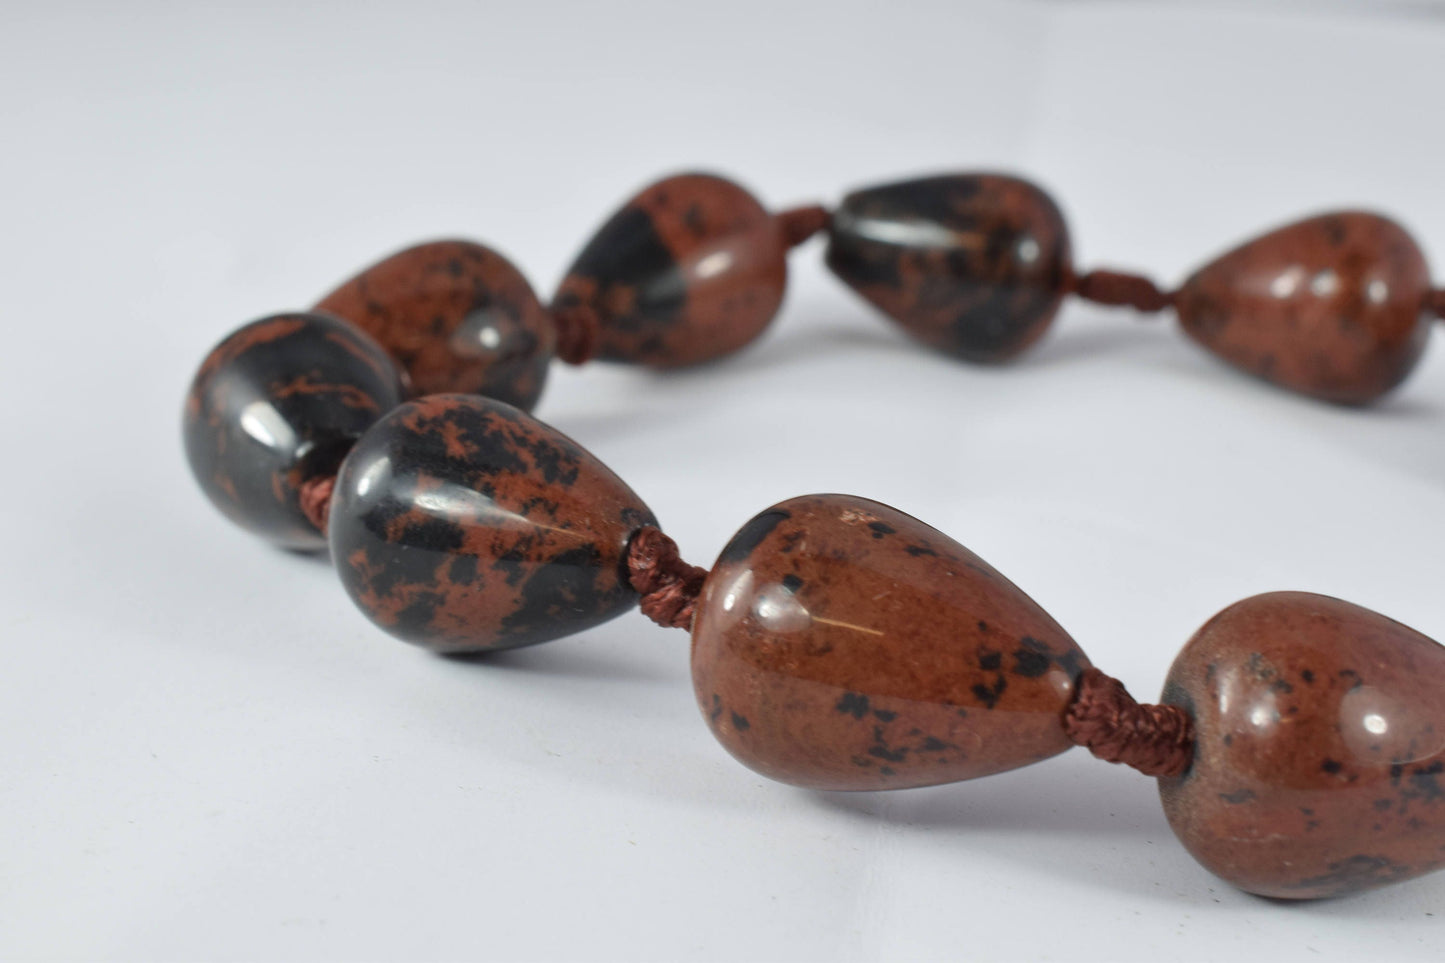 20x14mm Mahogany Obsidian Tear Drop Oval Stone Beads, 1.5mm hole opening, 60grams/pk